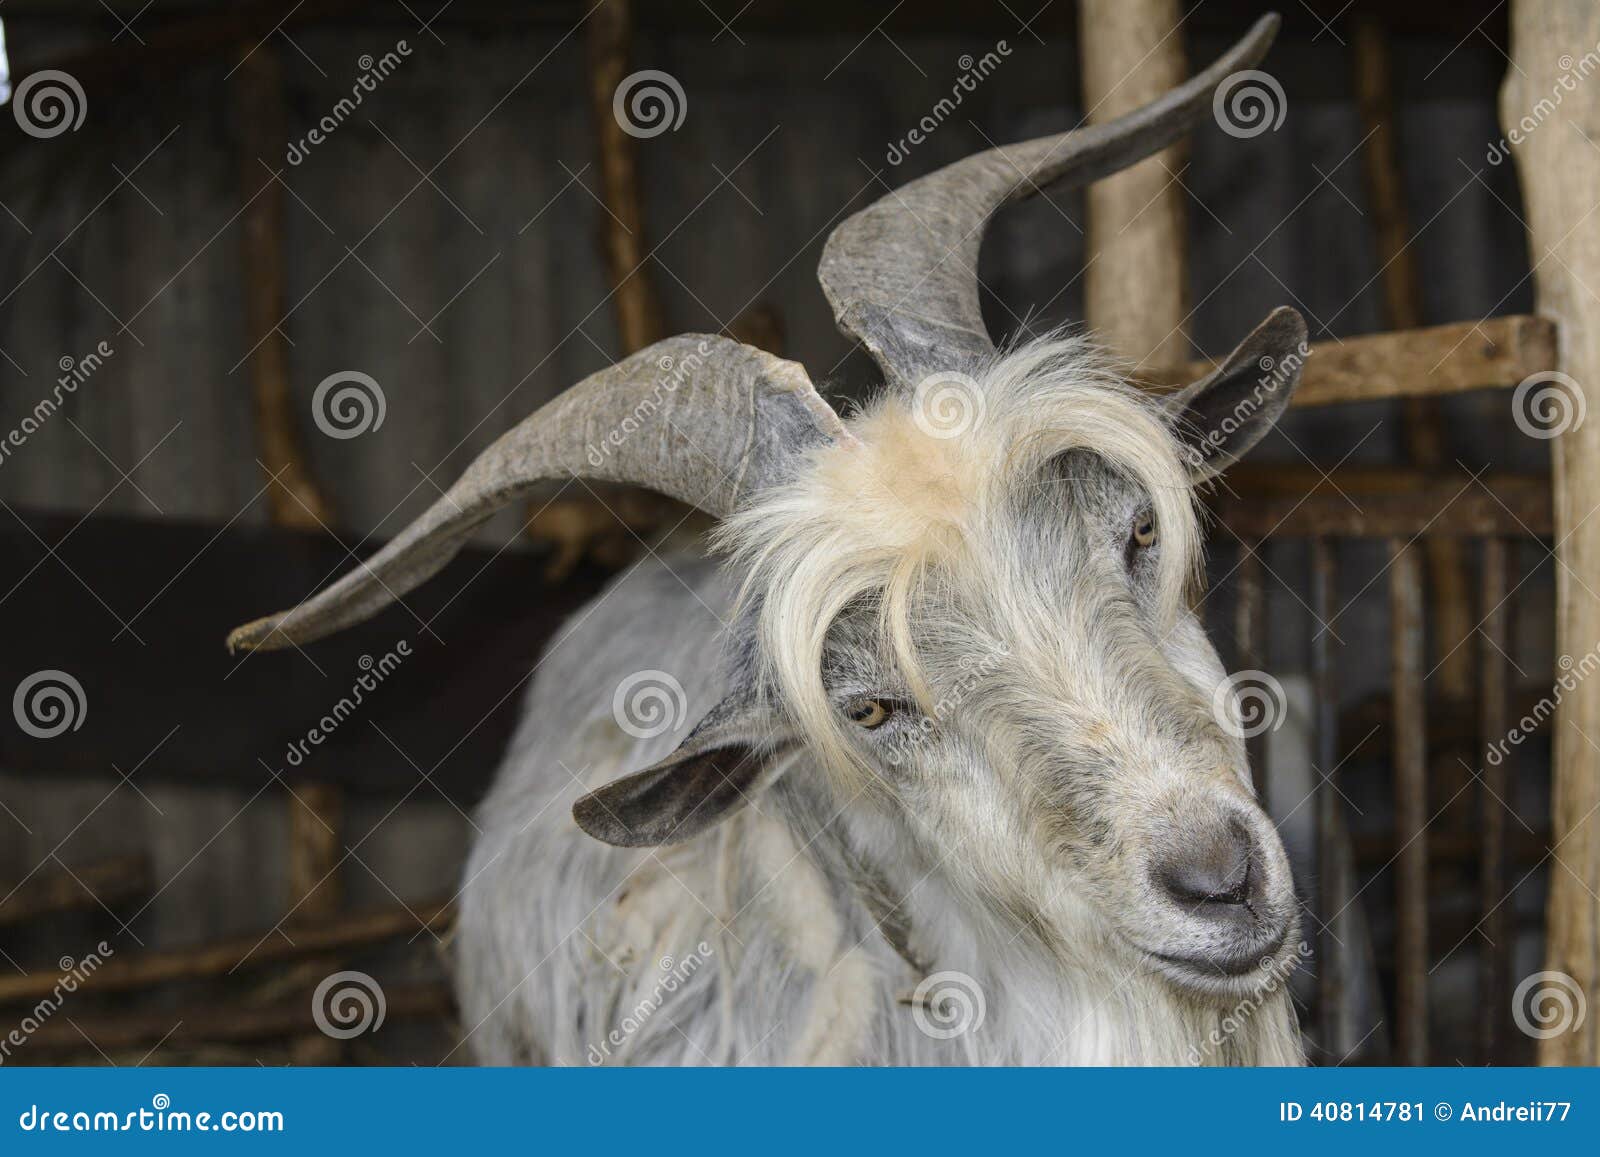 https://thumbs.dreamstime.com/z/goats-old-goat-big-horns-40814781.jpg